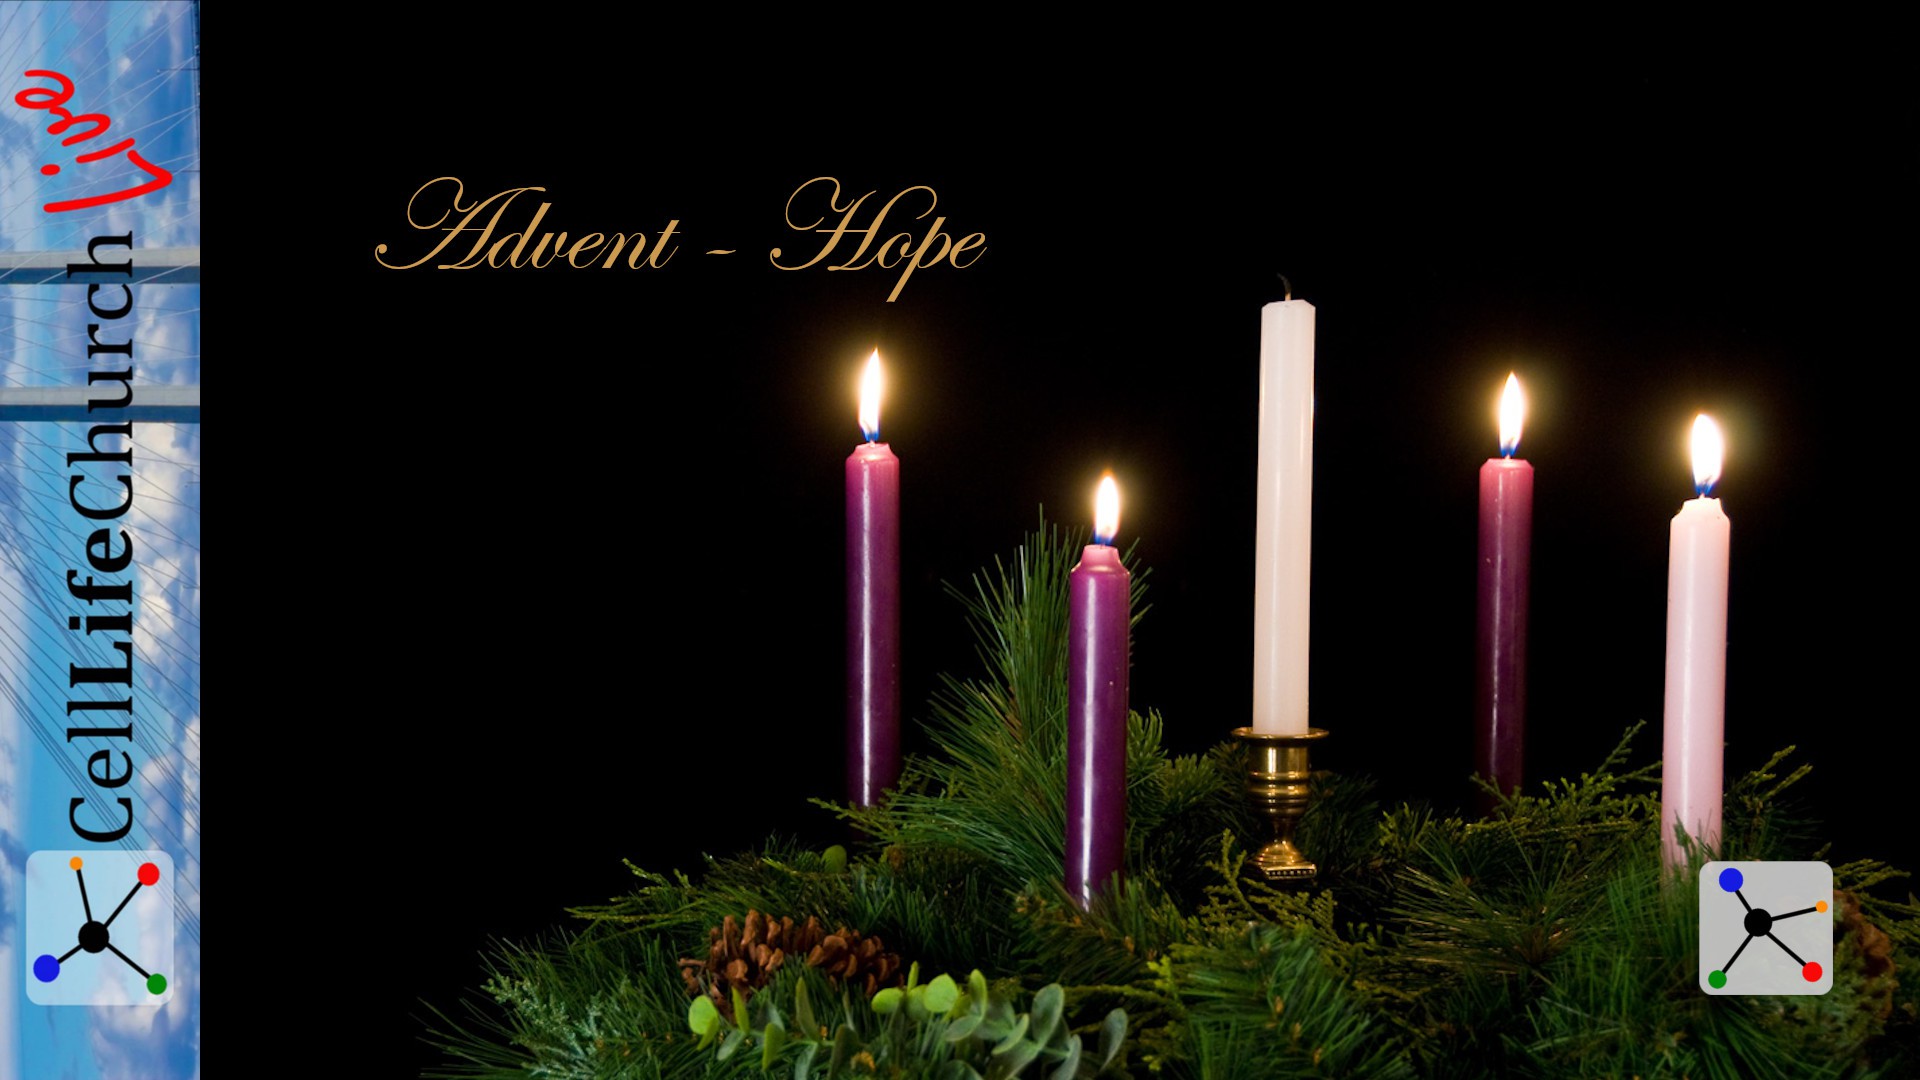 Advent - Hope